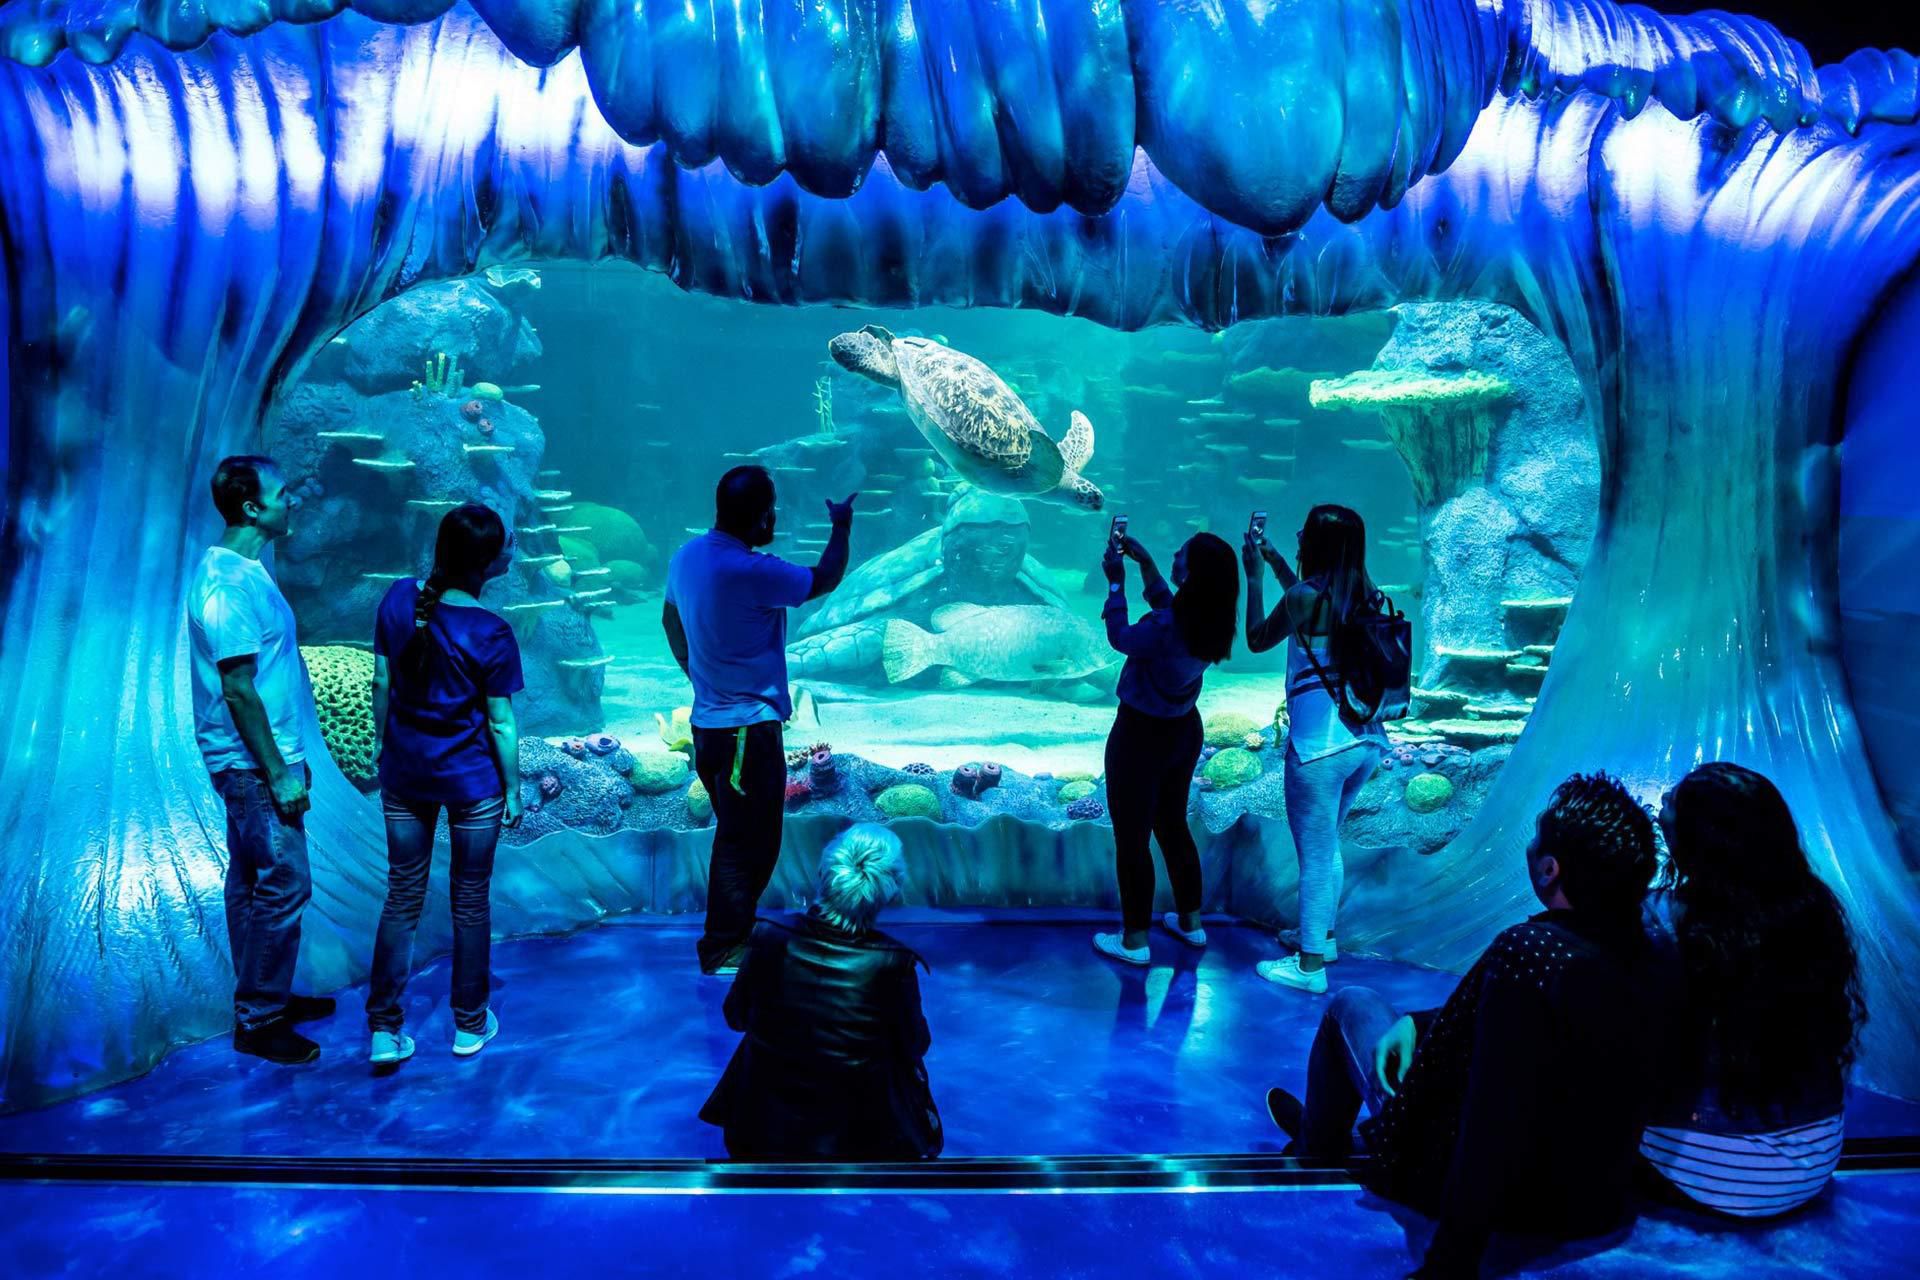 Sydney Aquarium located within close proximity to the hotel